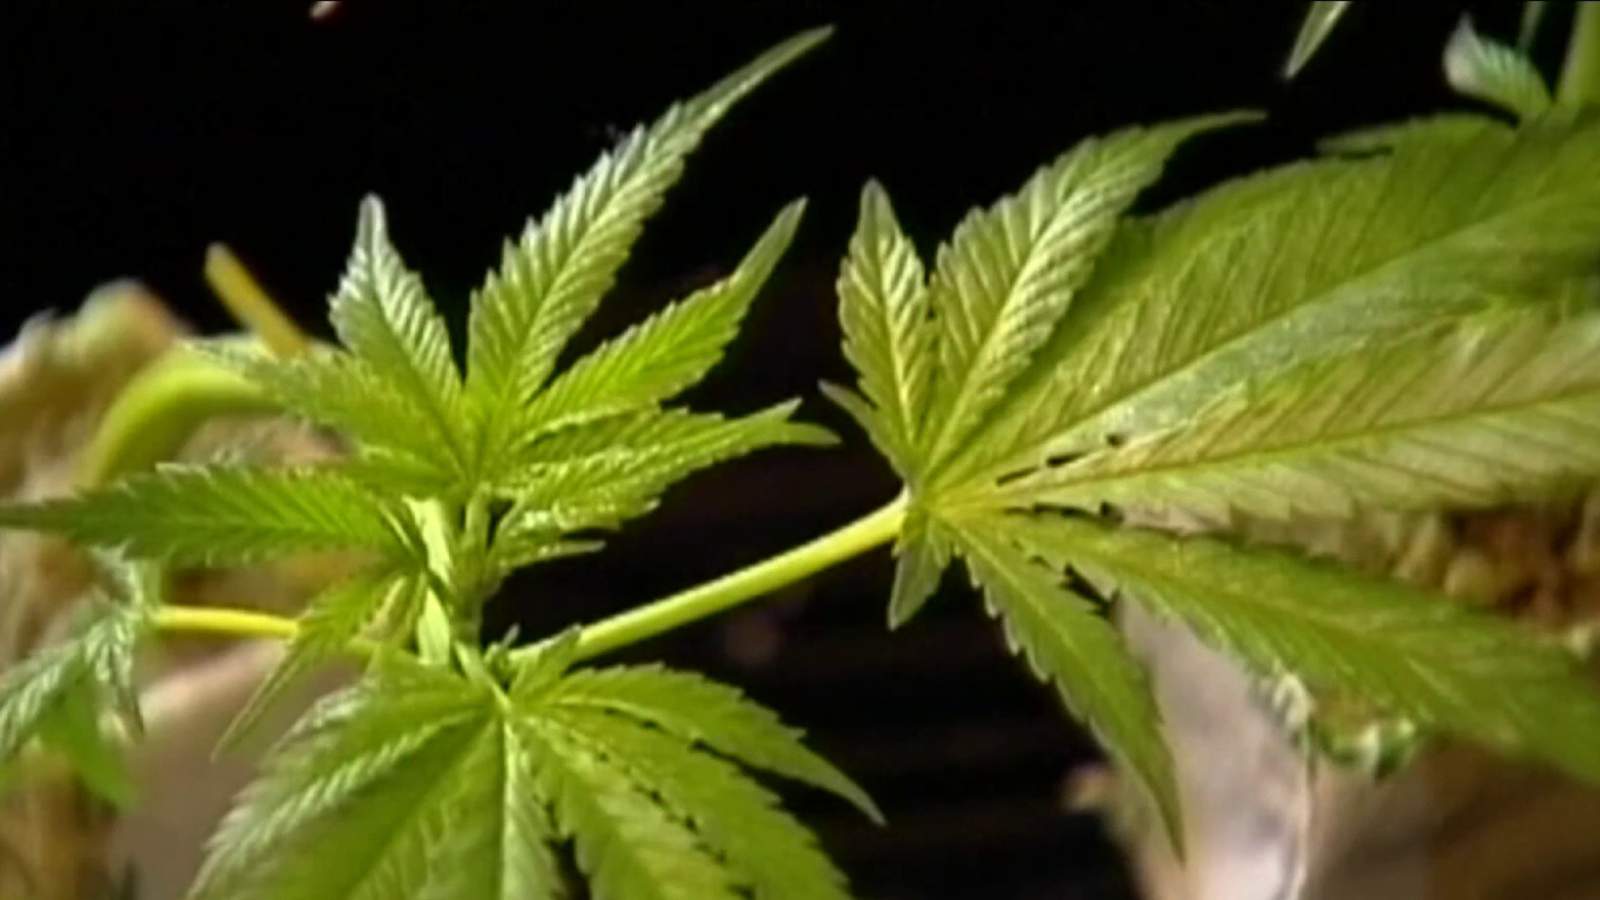 Virginia lawmakers now debating marijuana legalization